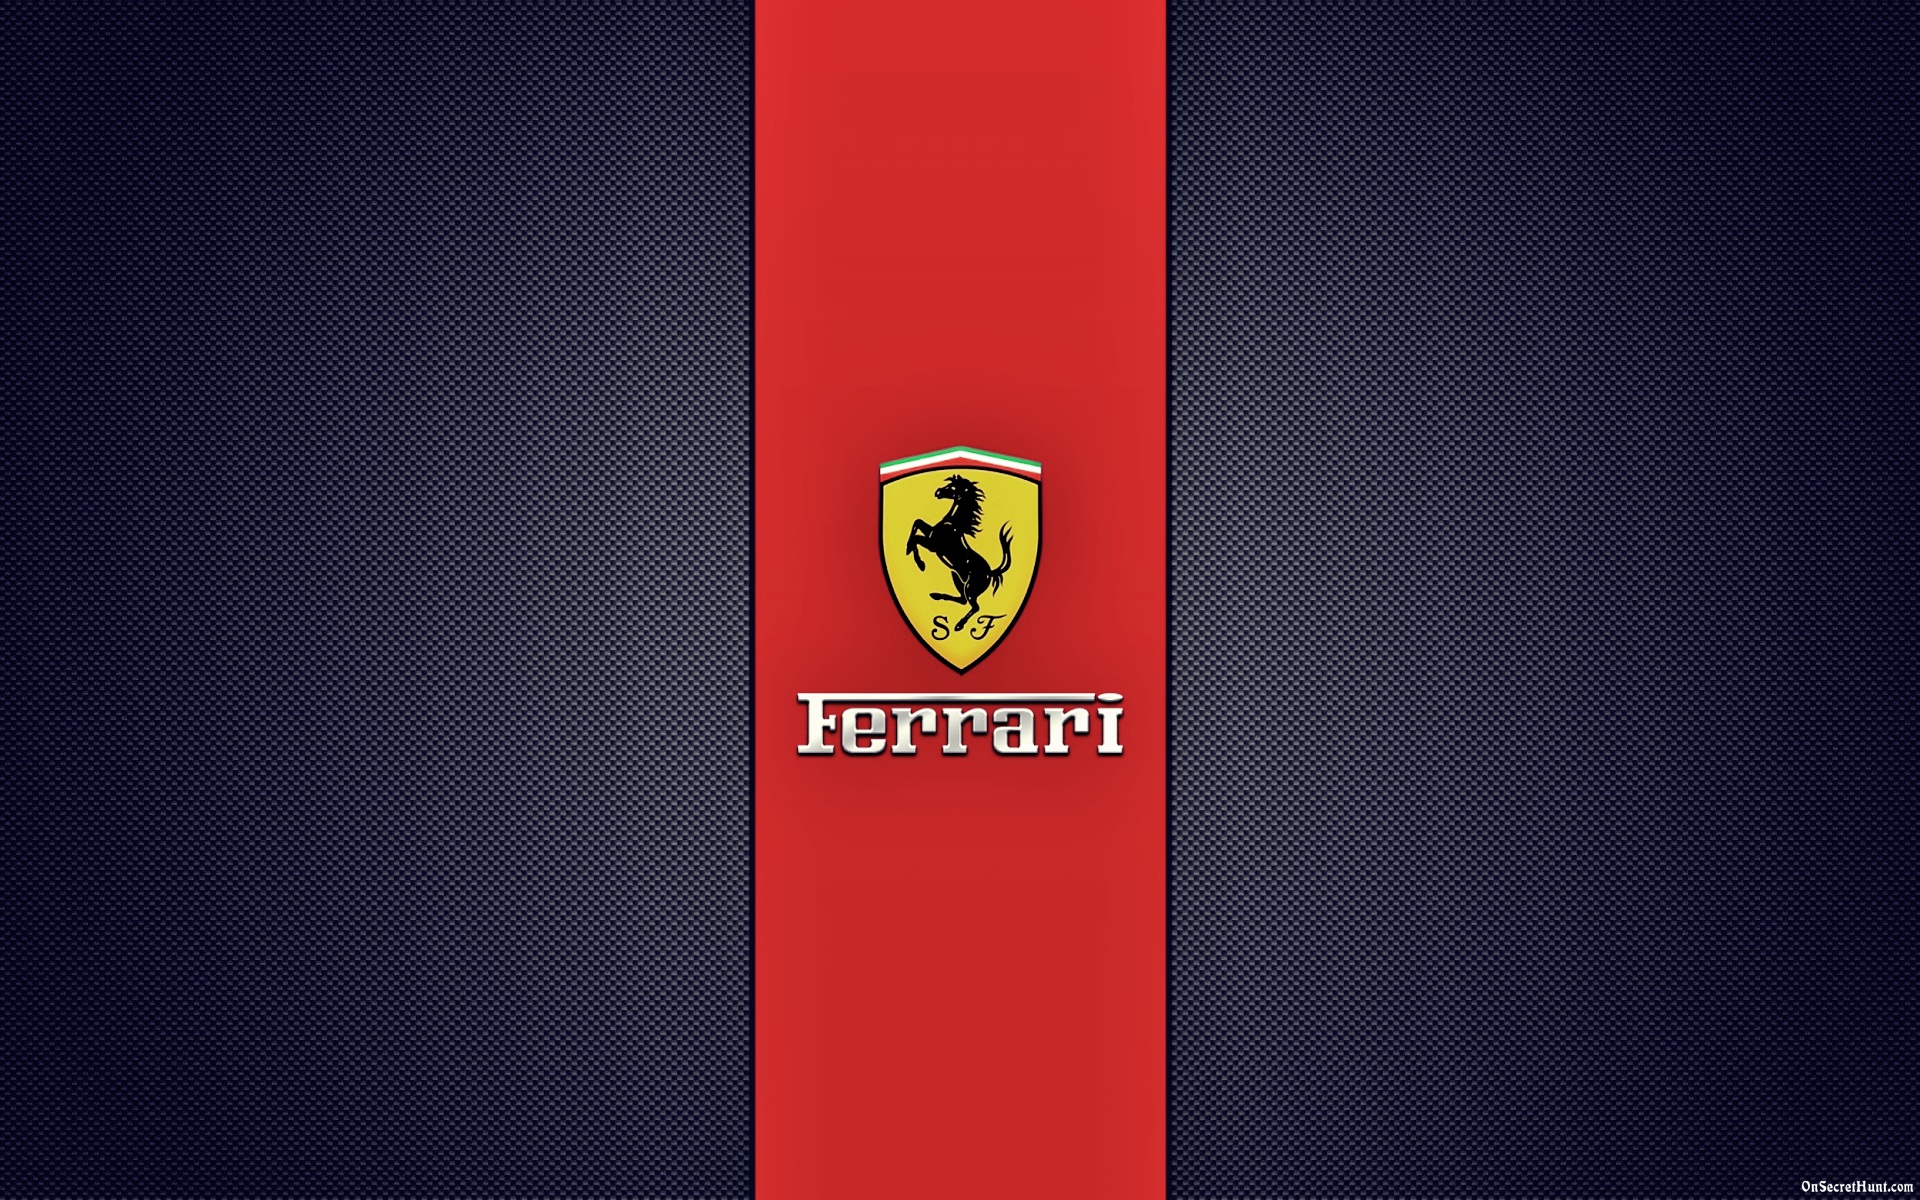 Ferrari Logo HD Wallpaper